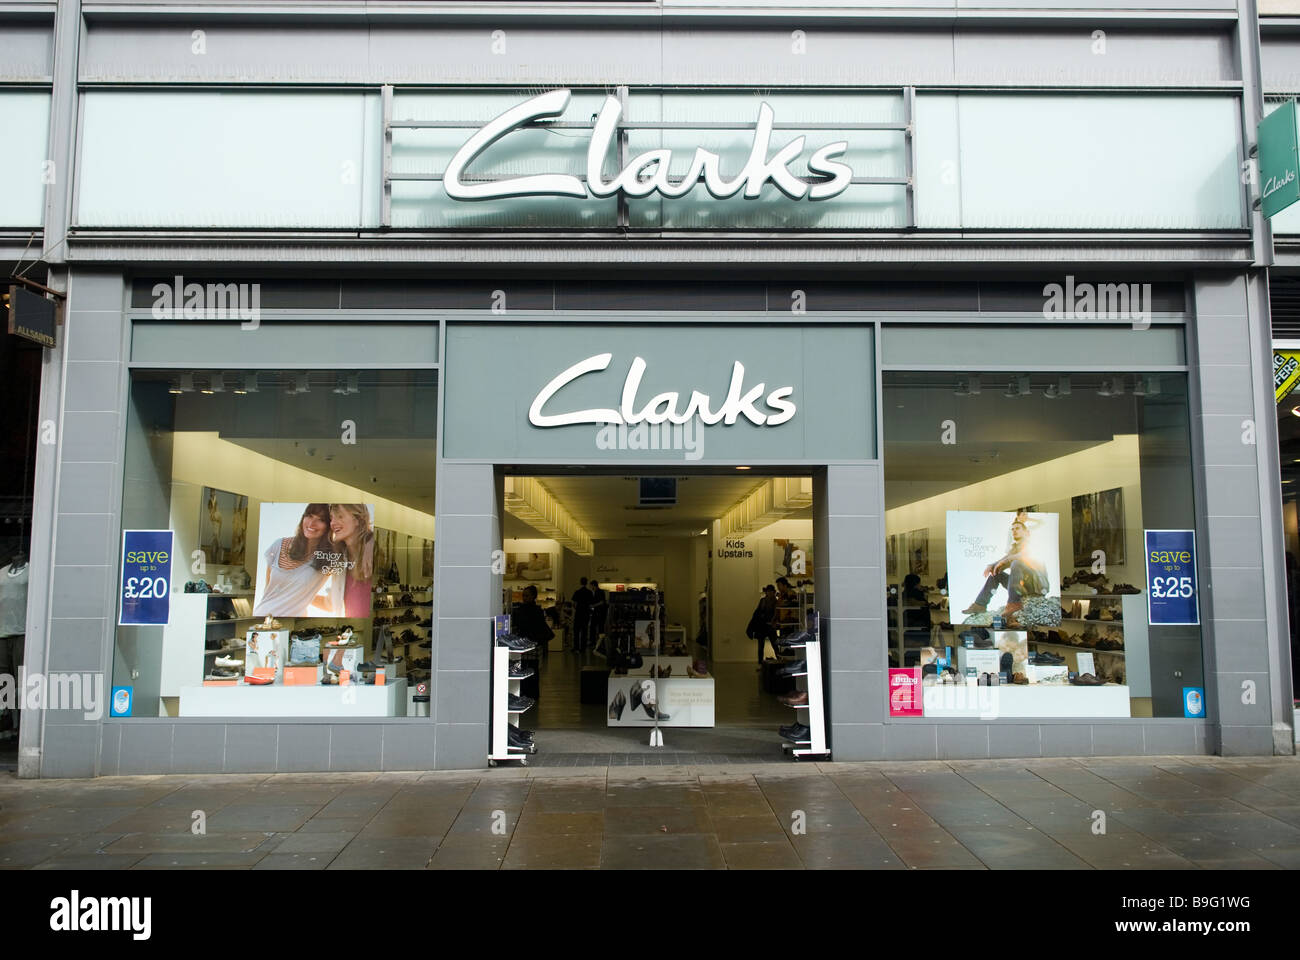 clarks stores